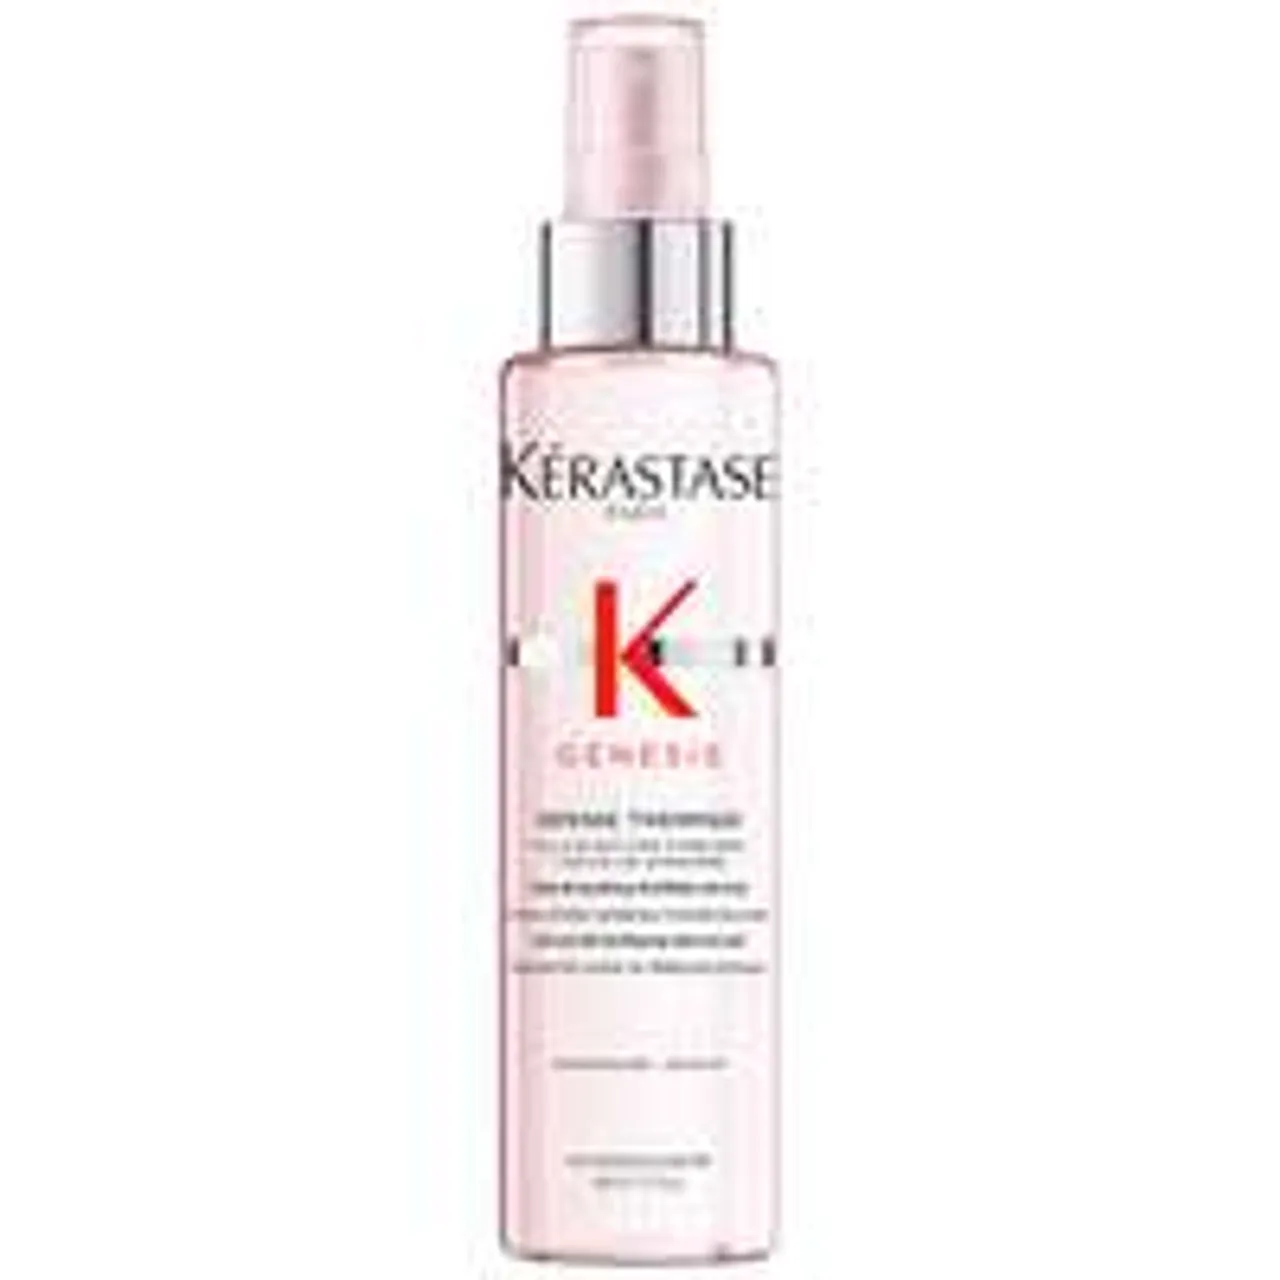 Kerastase Genesis Defense Thermique: Anti Hair-Fall Fortifying Blow-Dry Fluid 150ml